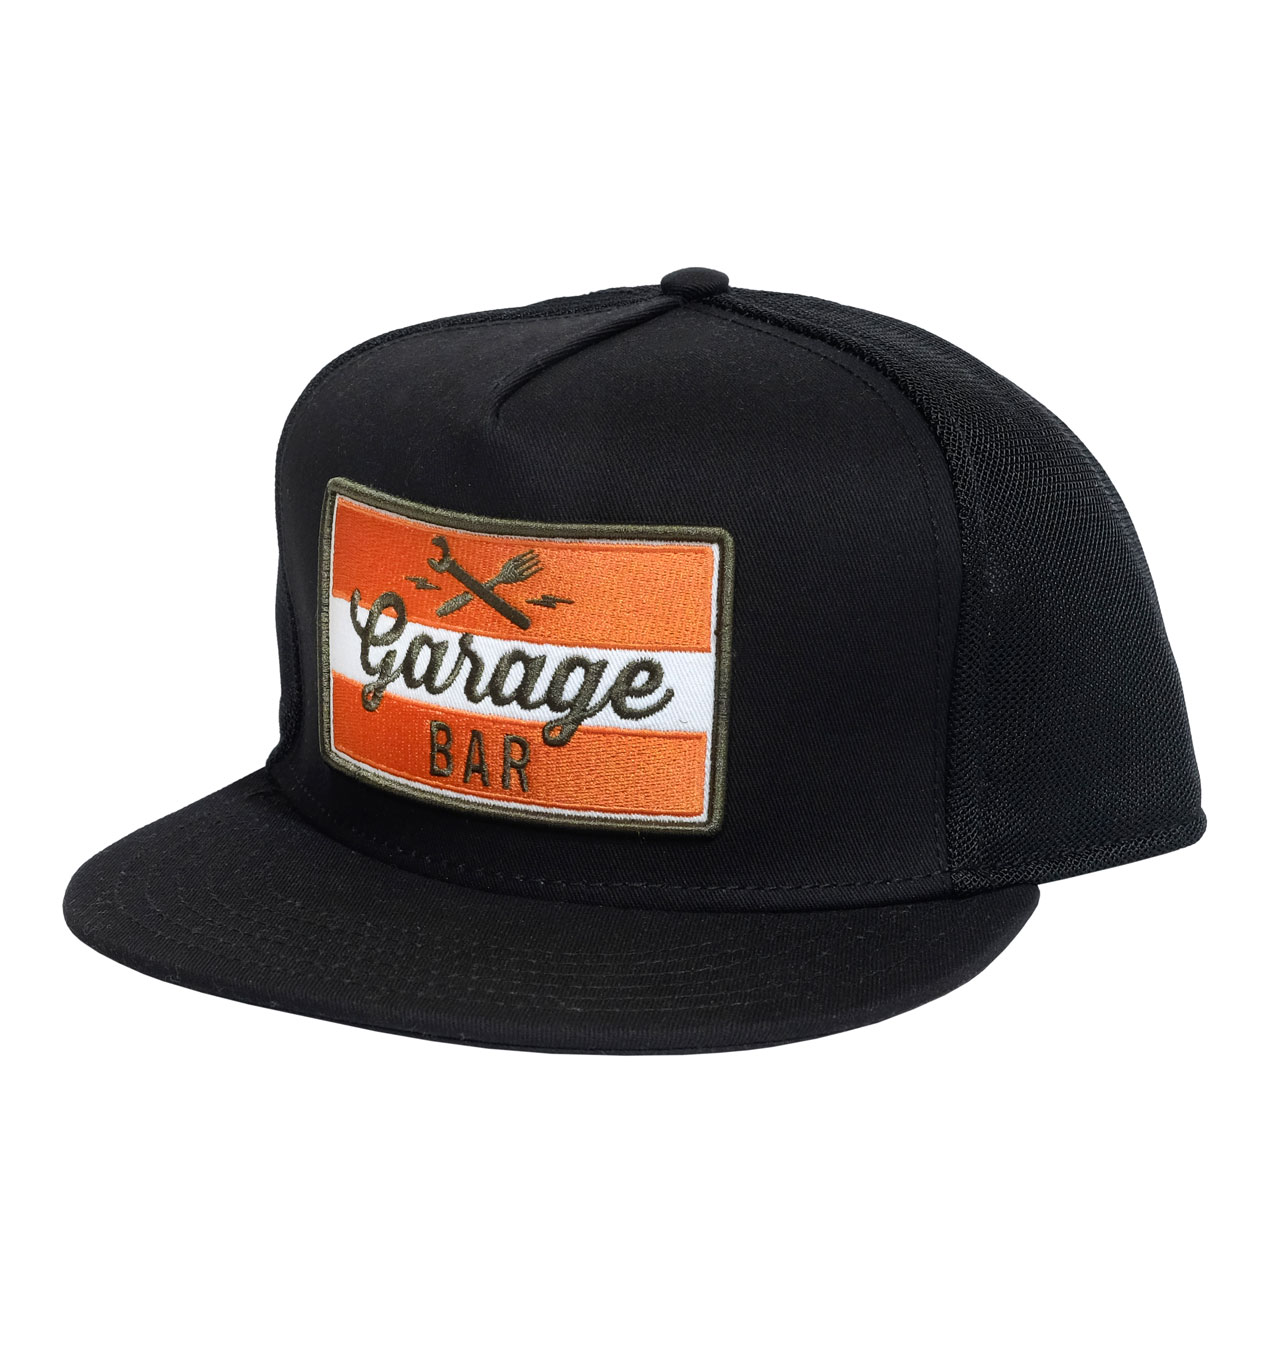 Garage Bar - Garage Bar Logo Cap - Black